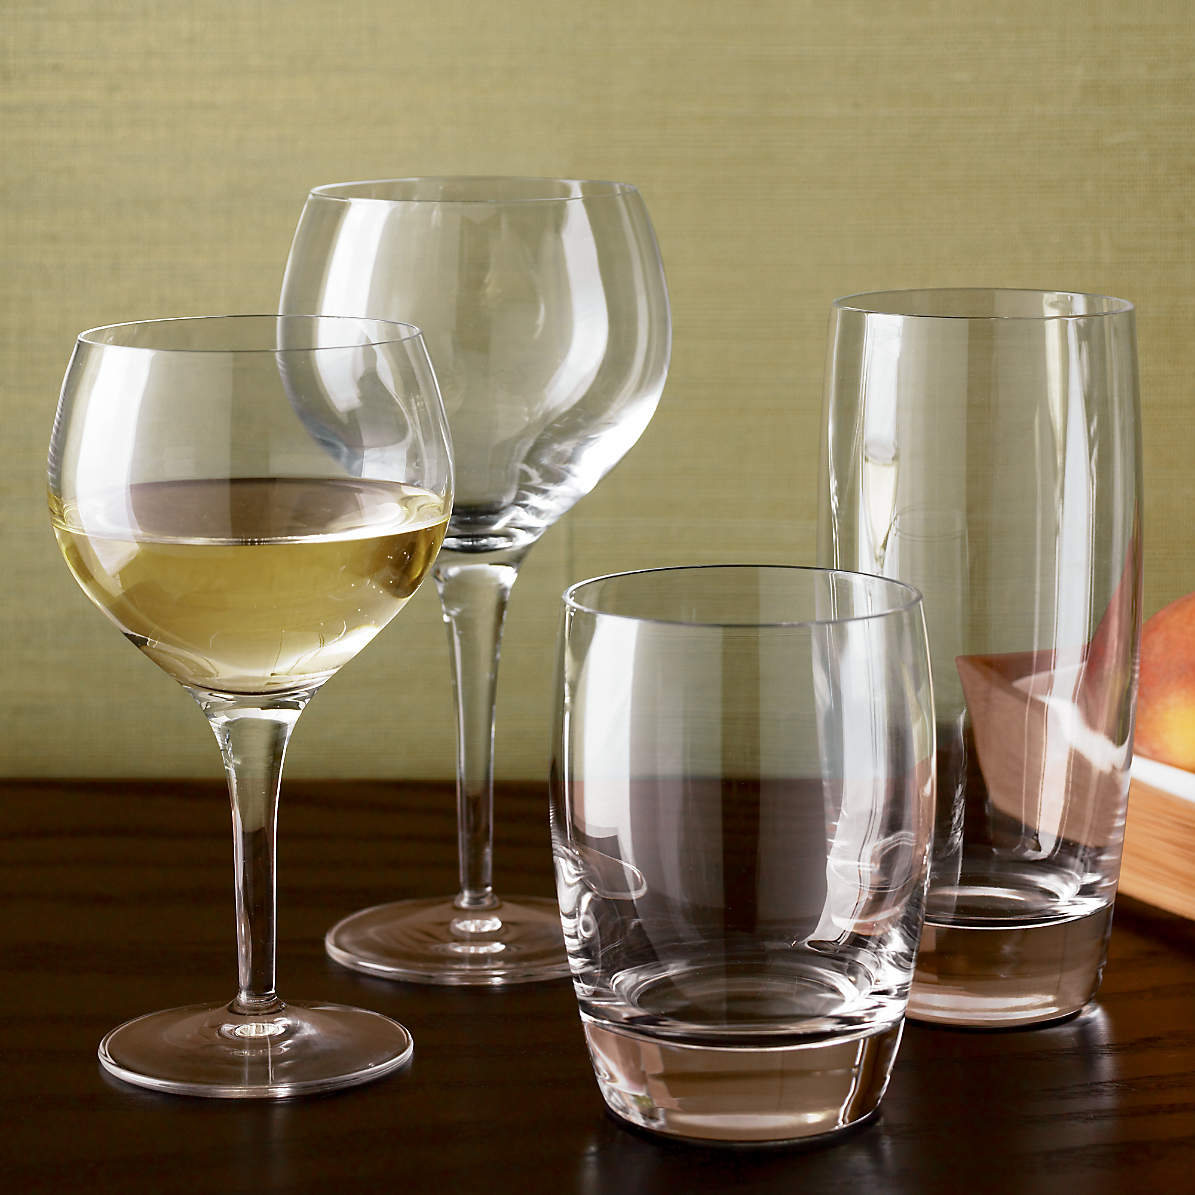 Otis White Wine Glass - Set of 2